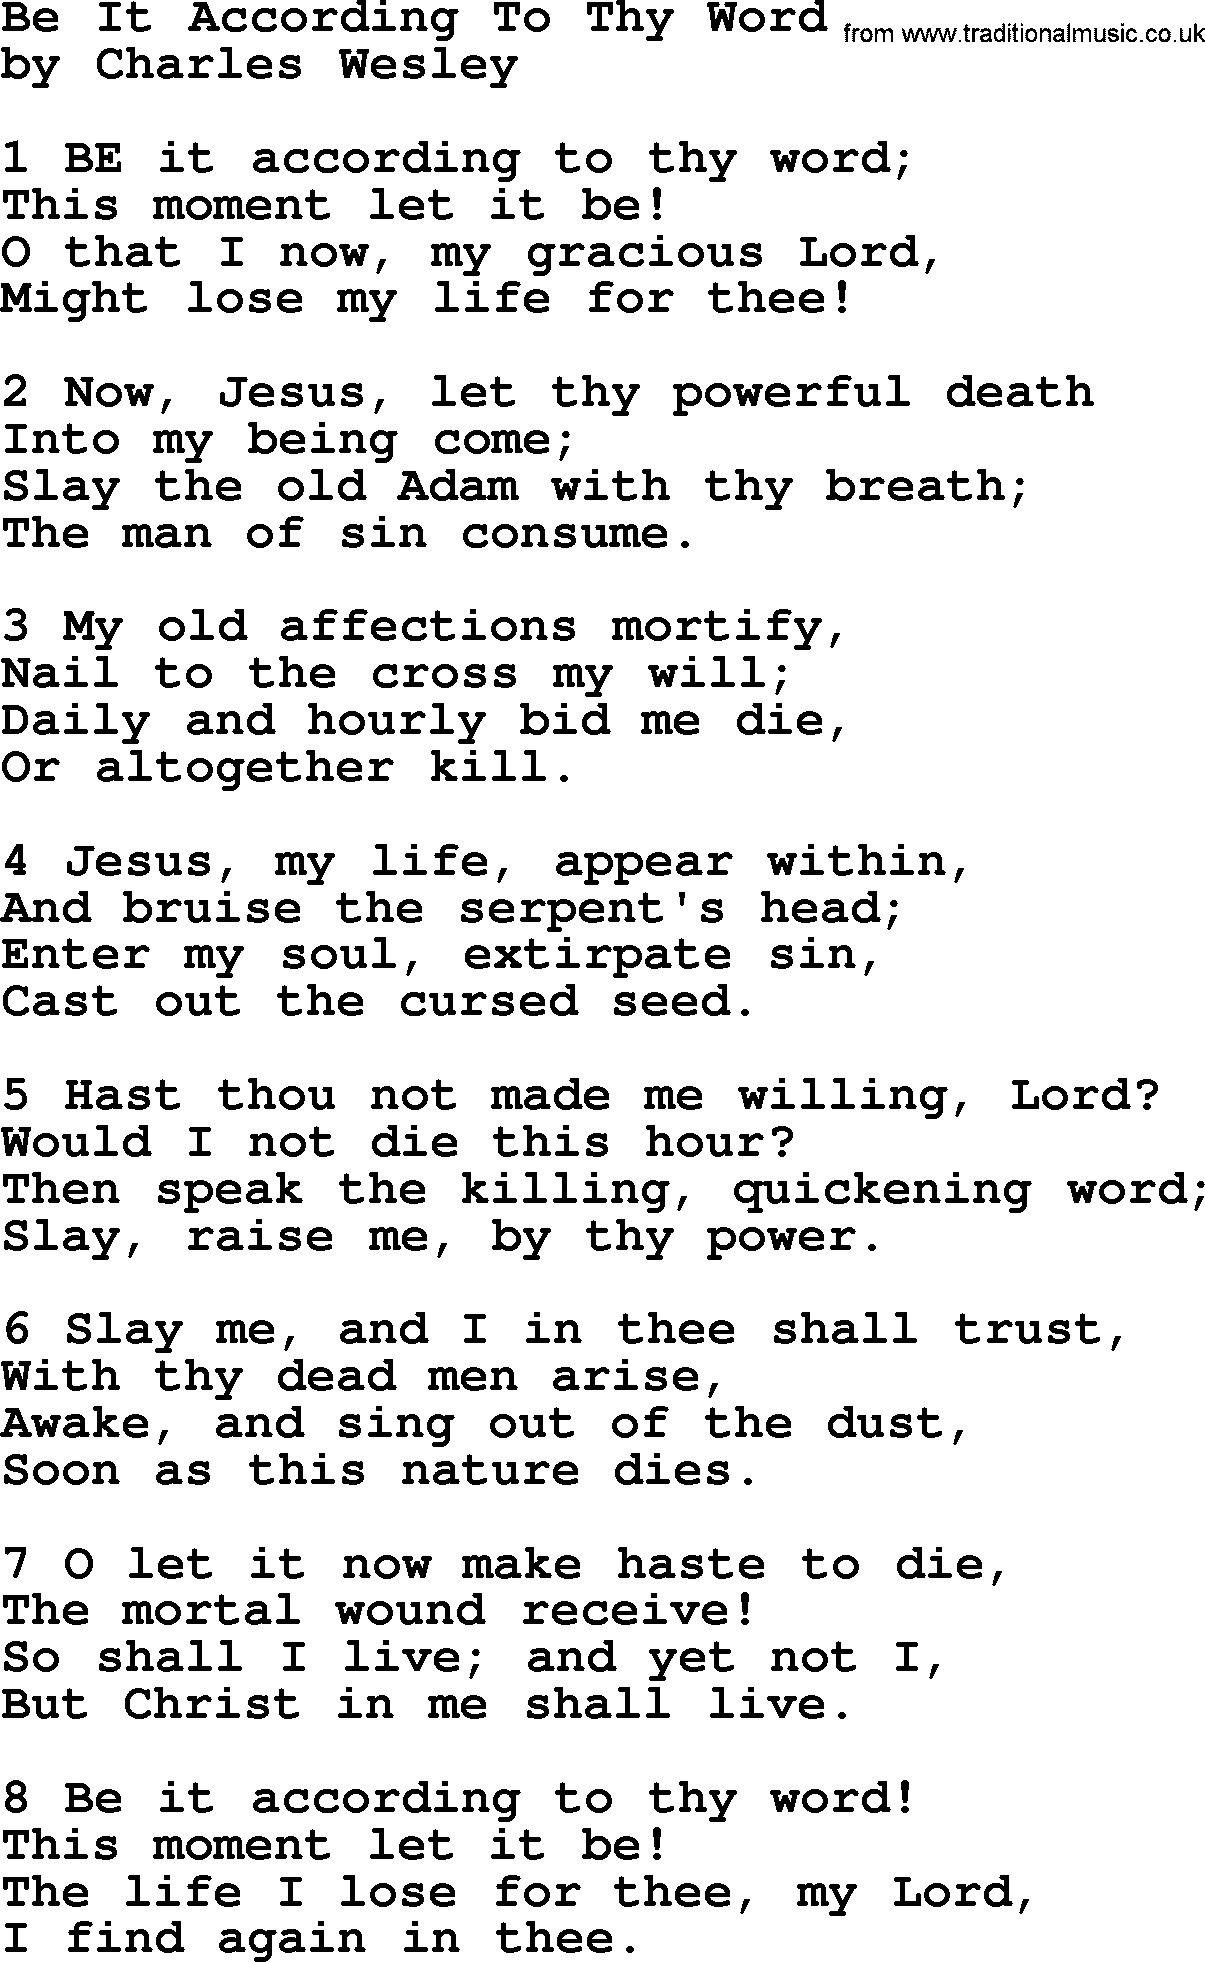 Charles Wesley hymn: Be It According To Thy Word, lyrics